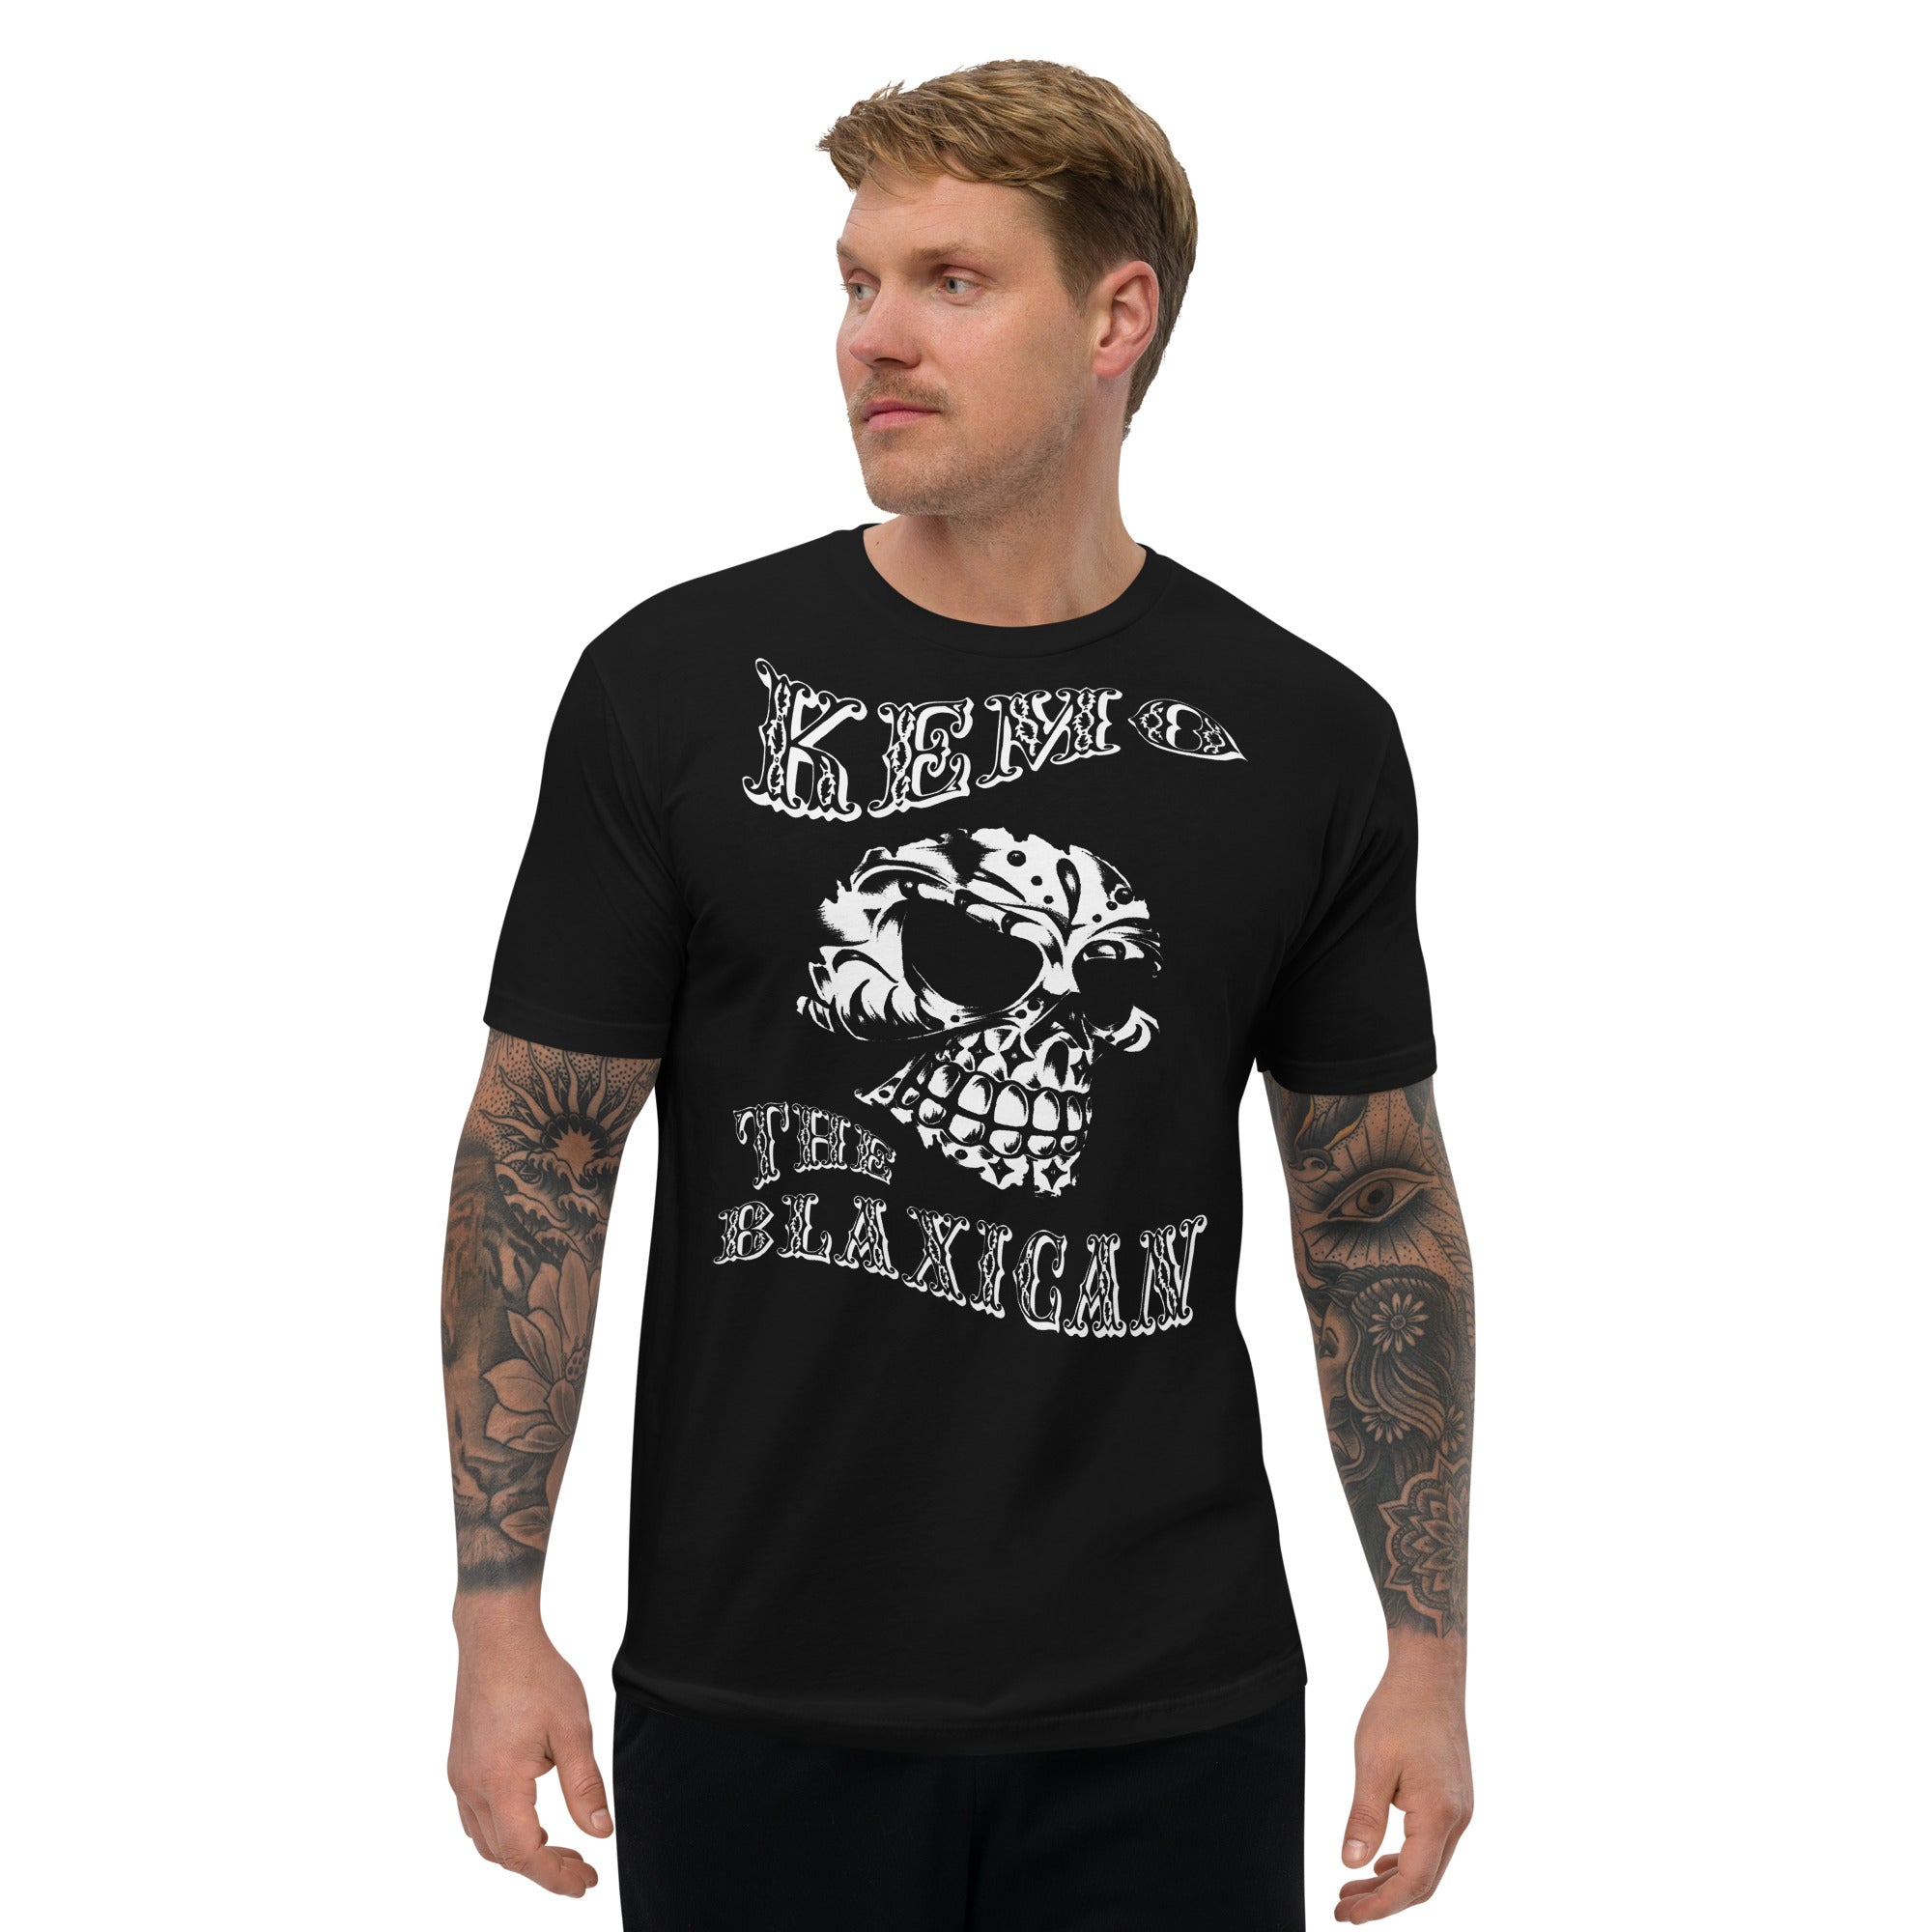 KEMO THE BLAXICAN - VISION SKULL - Short Sleeve T-shirt